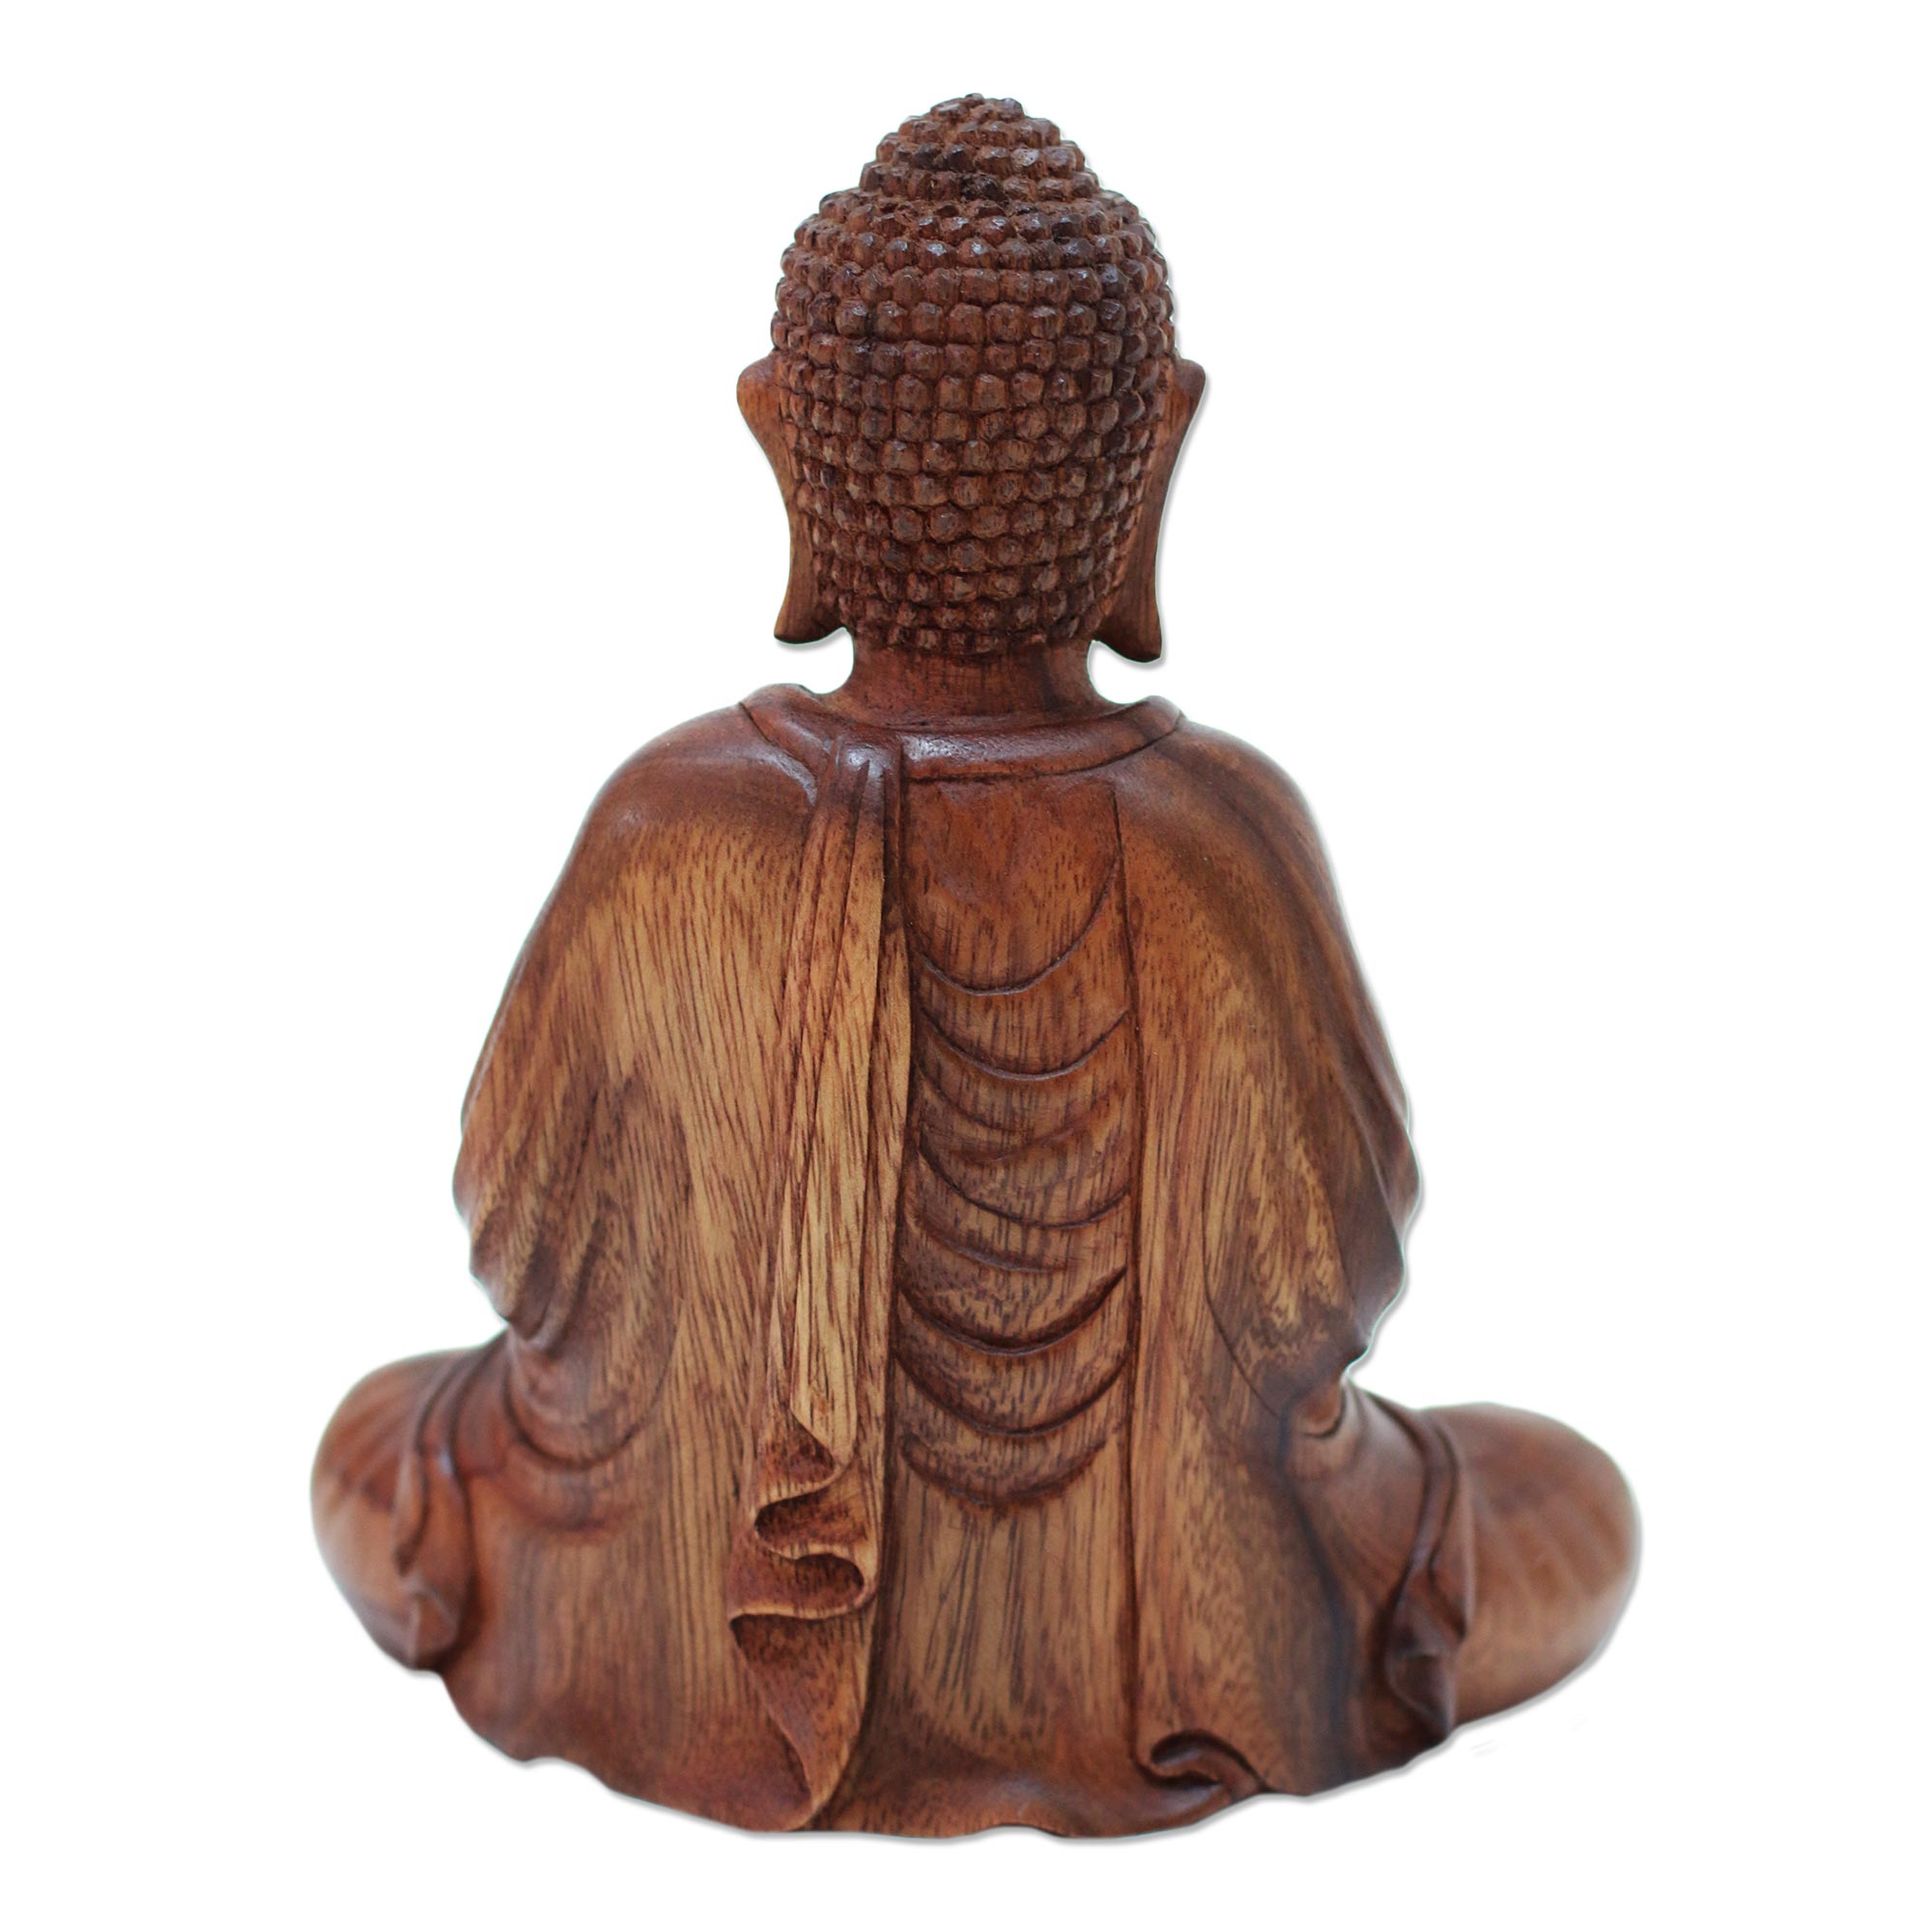 Meditative Suar Wood Buddha Sculpture from Indonesia - Enlightened ...